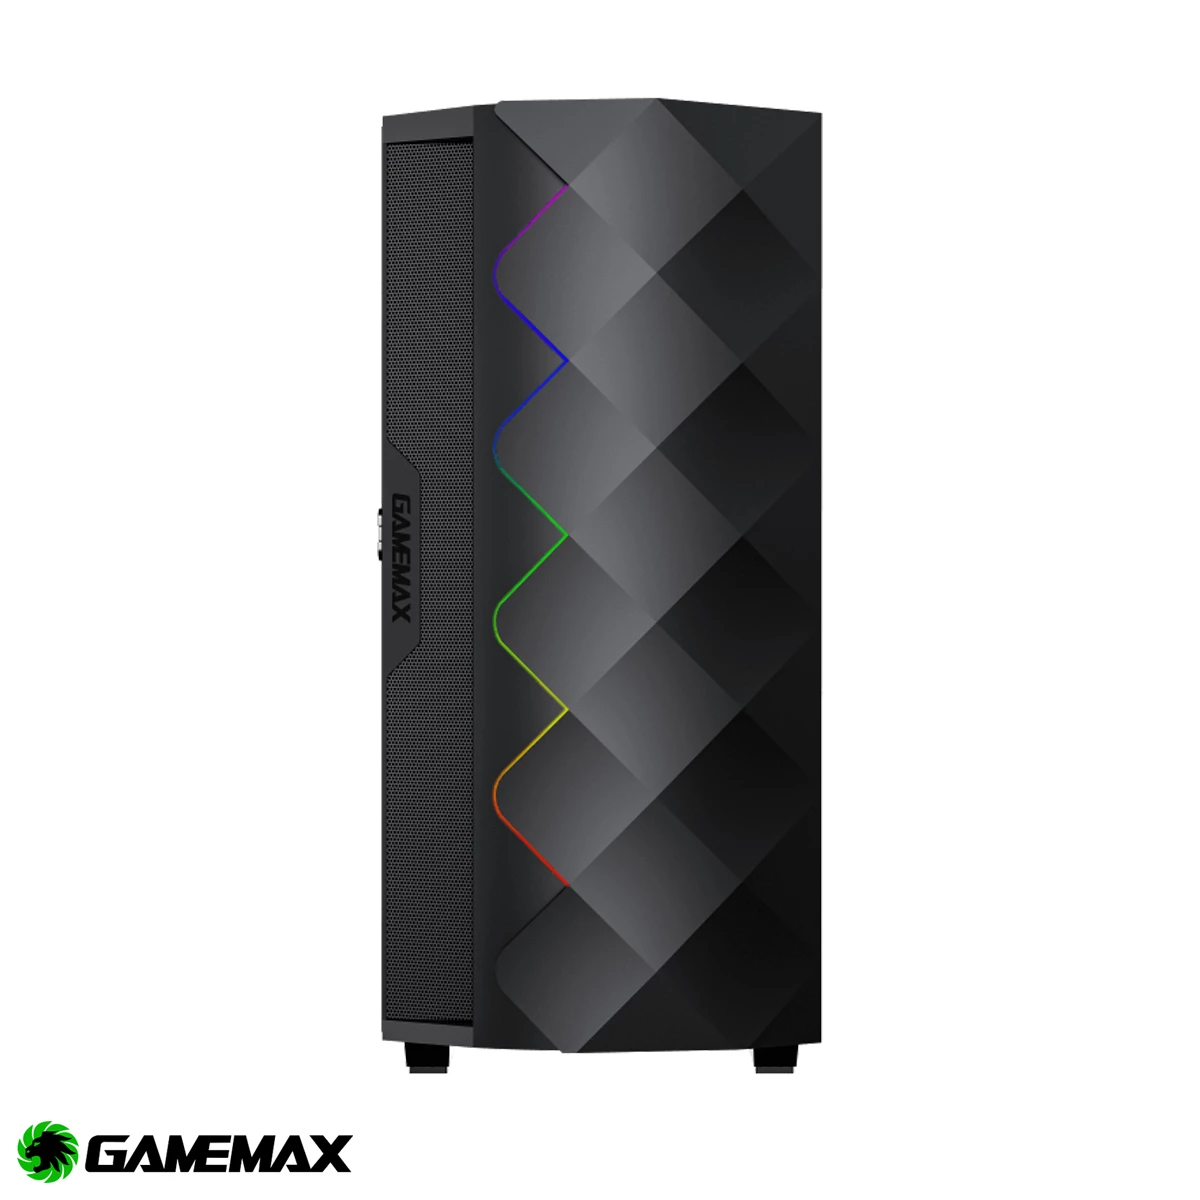 Case Gamemax Black Diamond COC Vidrio templado ARGB 1 ventilador